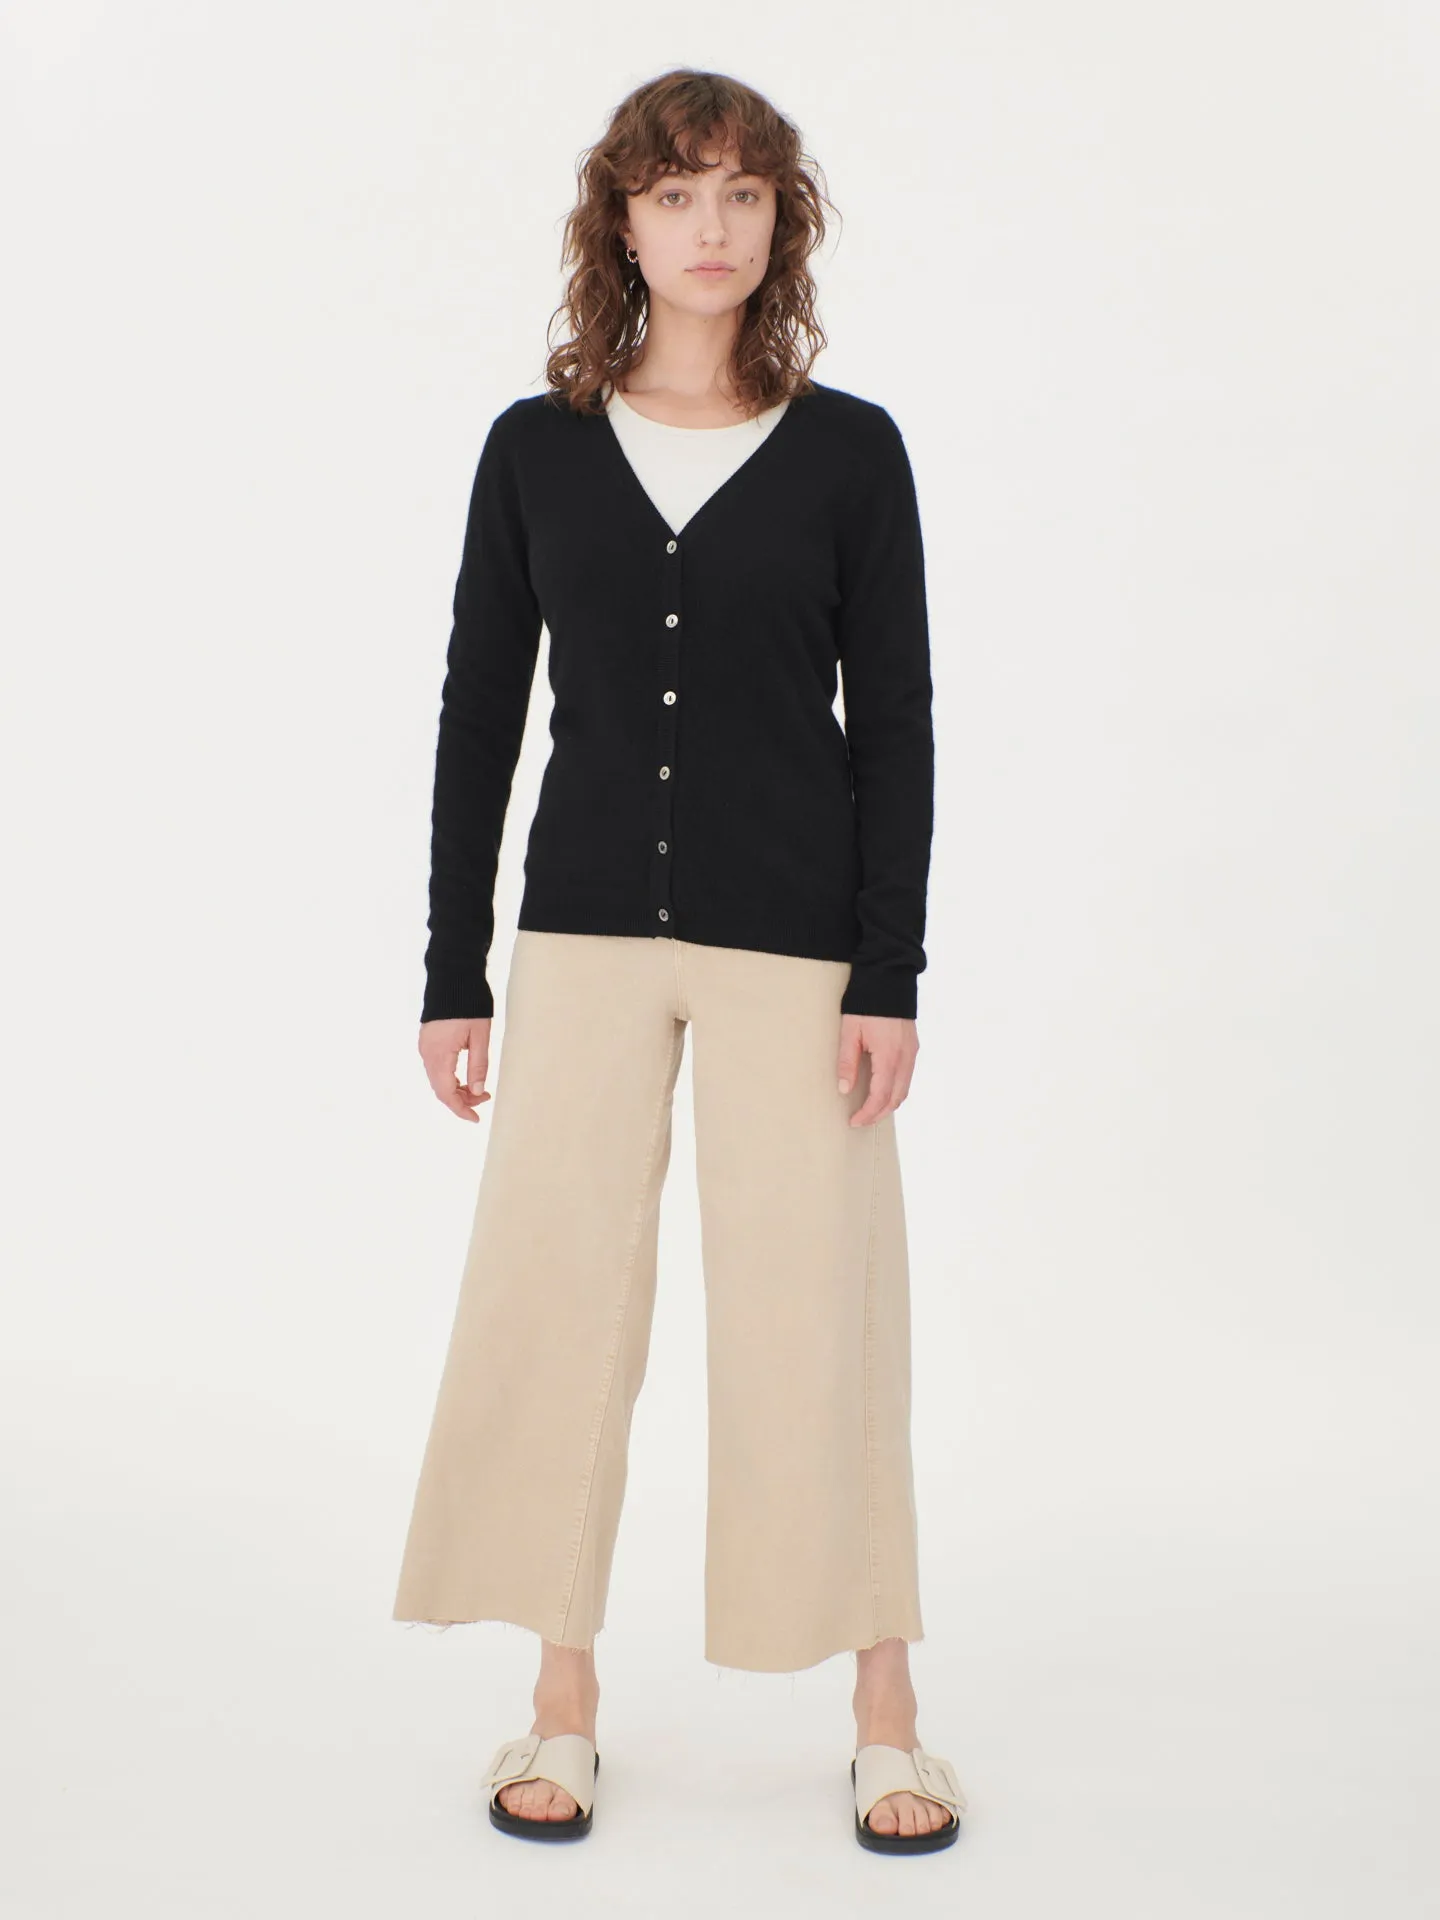 Women's Cashmere V-neck Button Cardigan Black - Gobi Cashmere